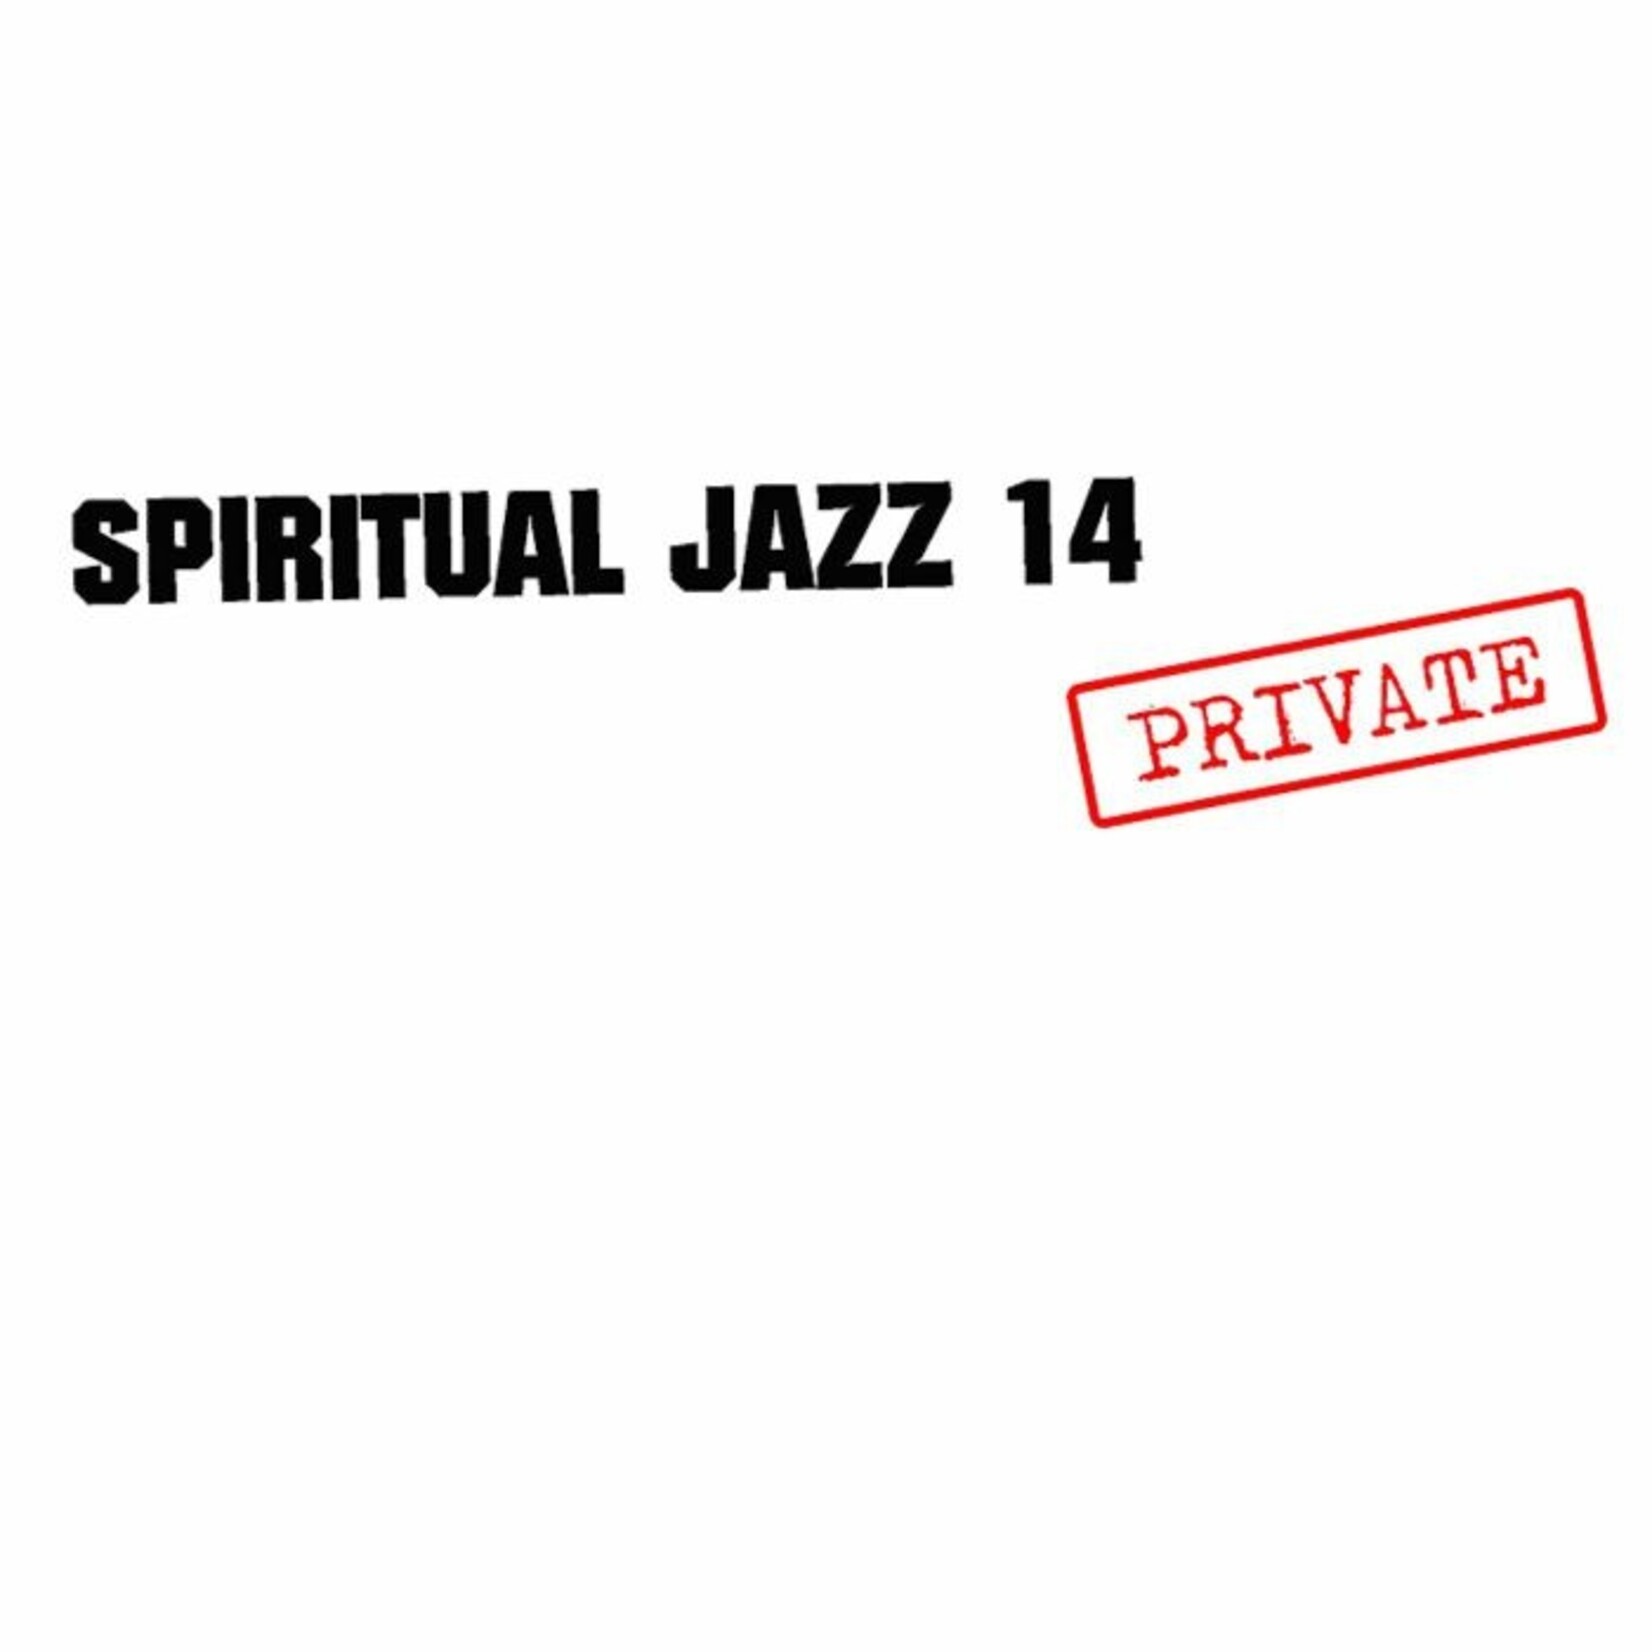 (PRE-ORDER) VARIOUS ARTISTS  -  SPIRITUAL JAZZ 14: PRIVATE  - LP